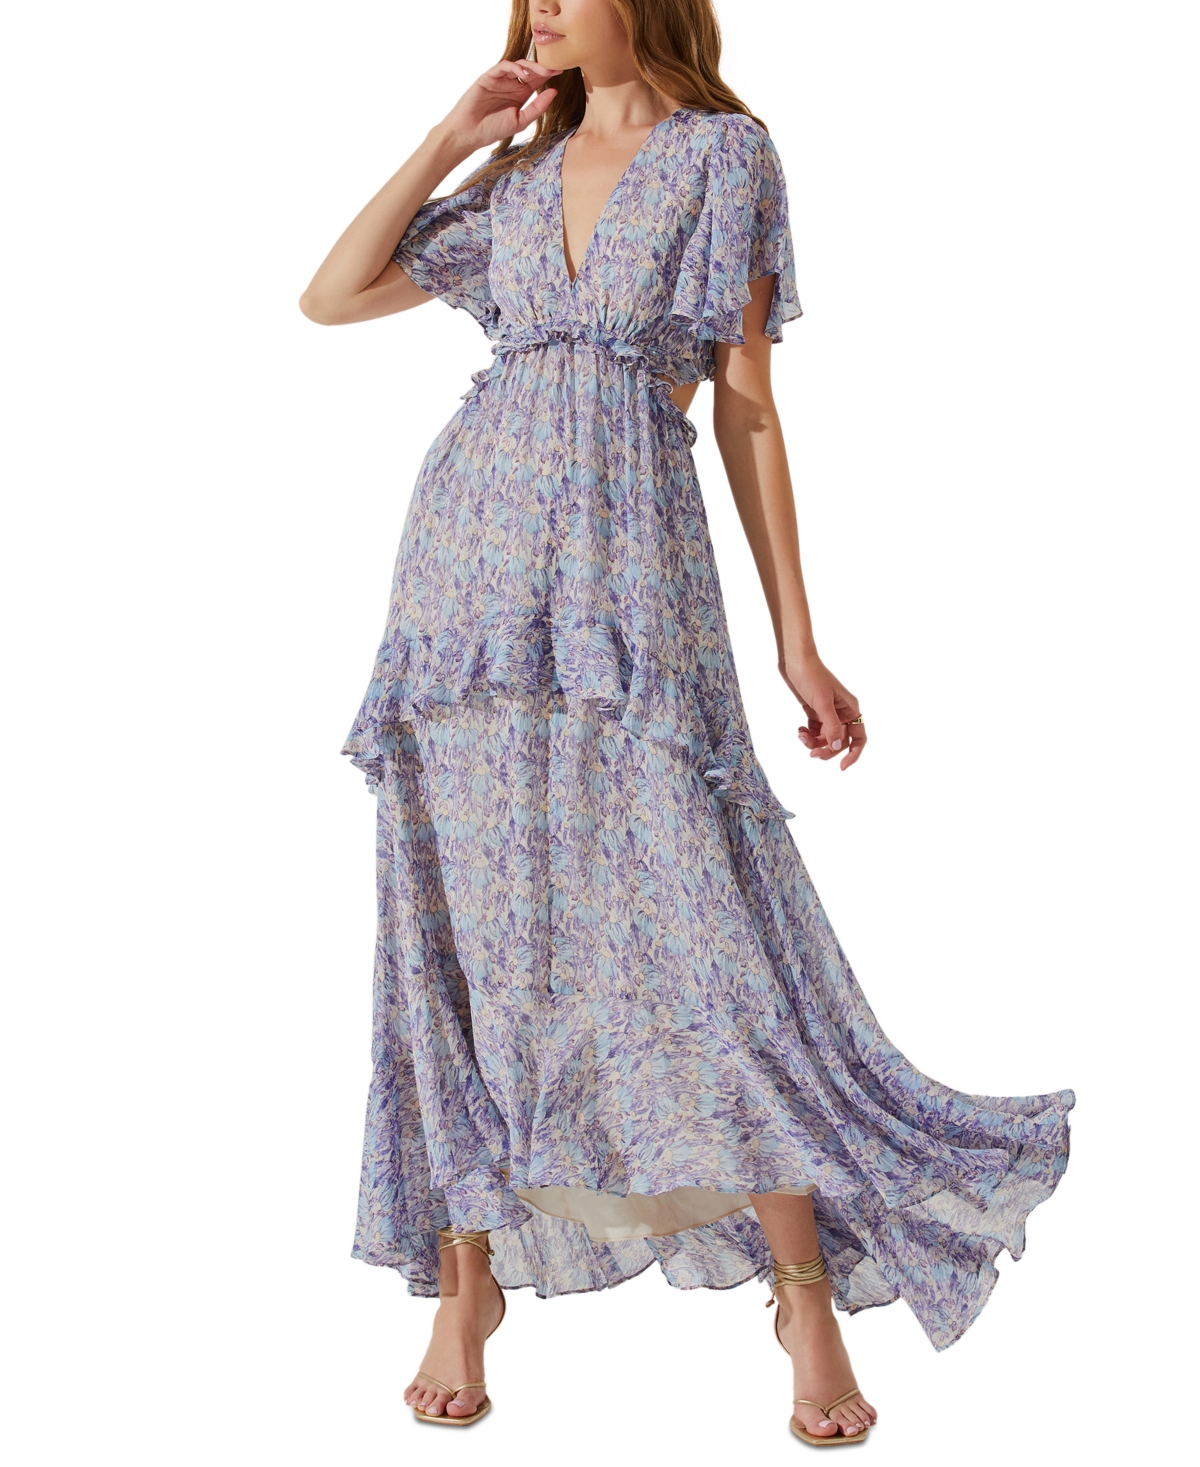 Cherli Ruffled Lace-Up Cutout-Back Maxi Dress - Purple/blue Floral